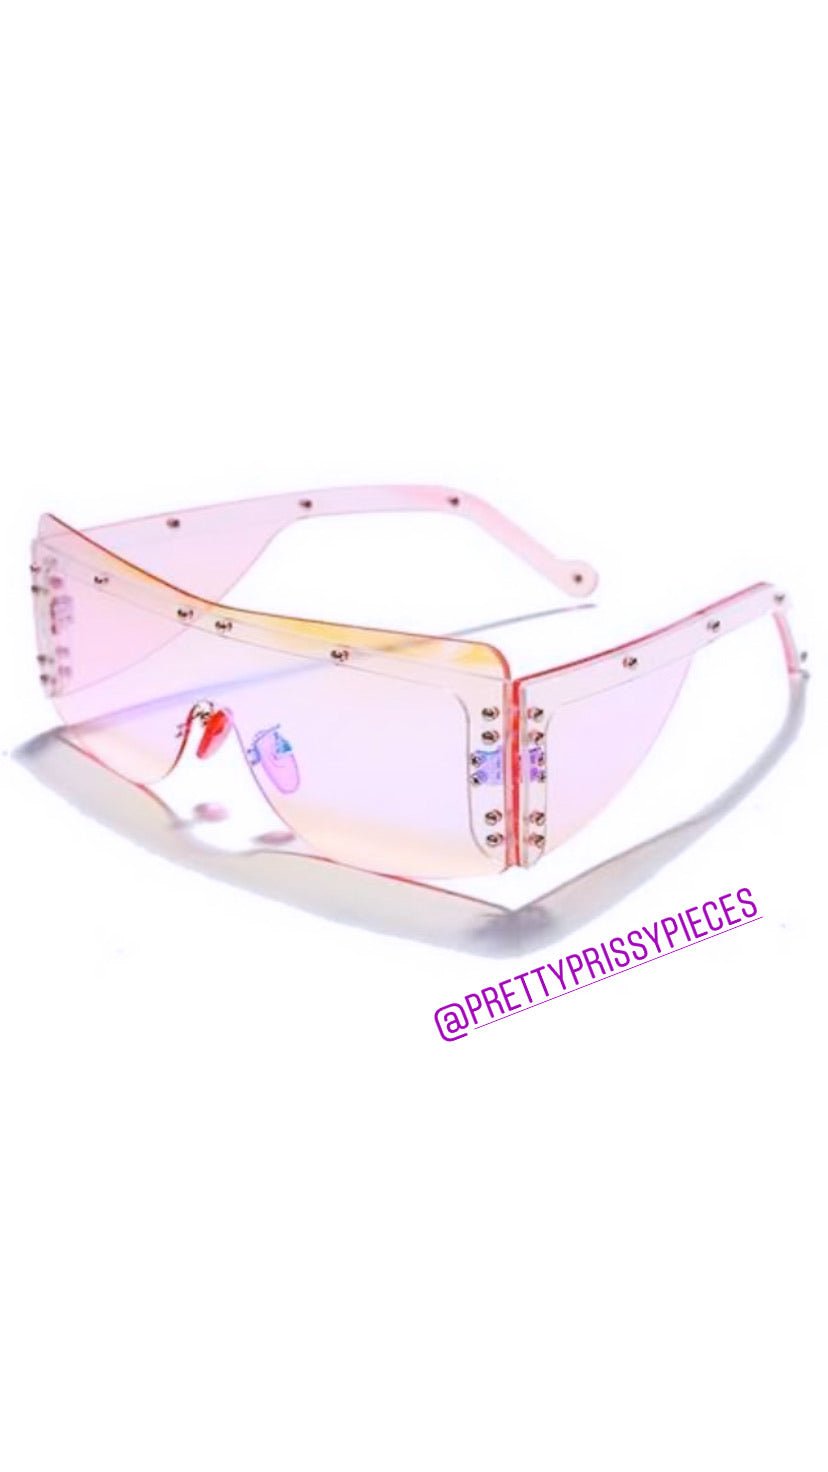 Ultraviolet sunglasses - Pretty Prissy Pieces sunglasses